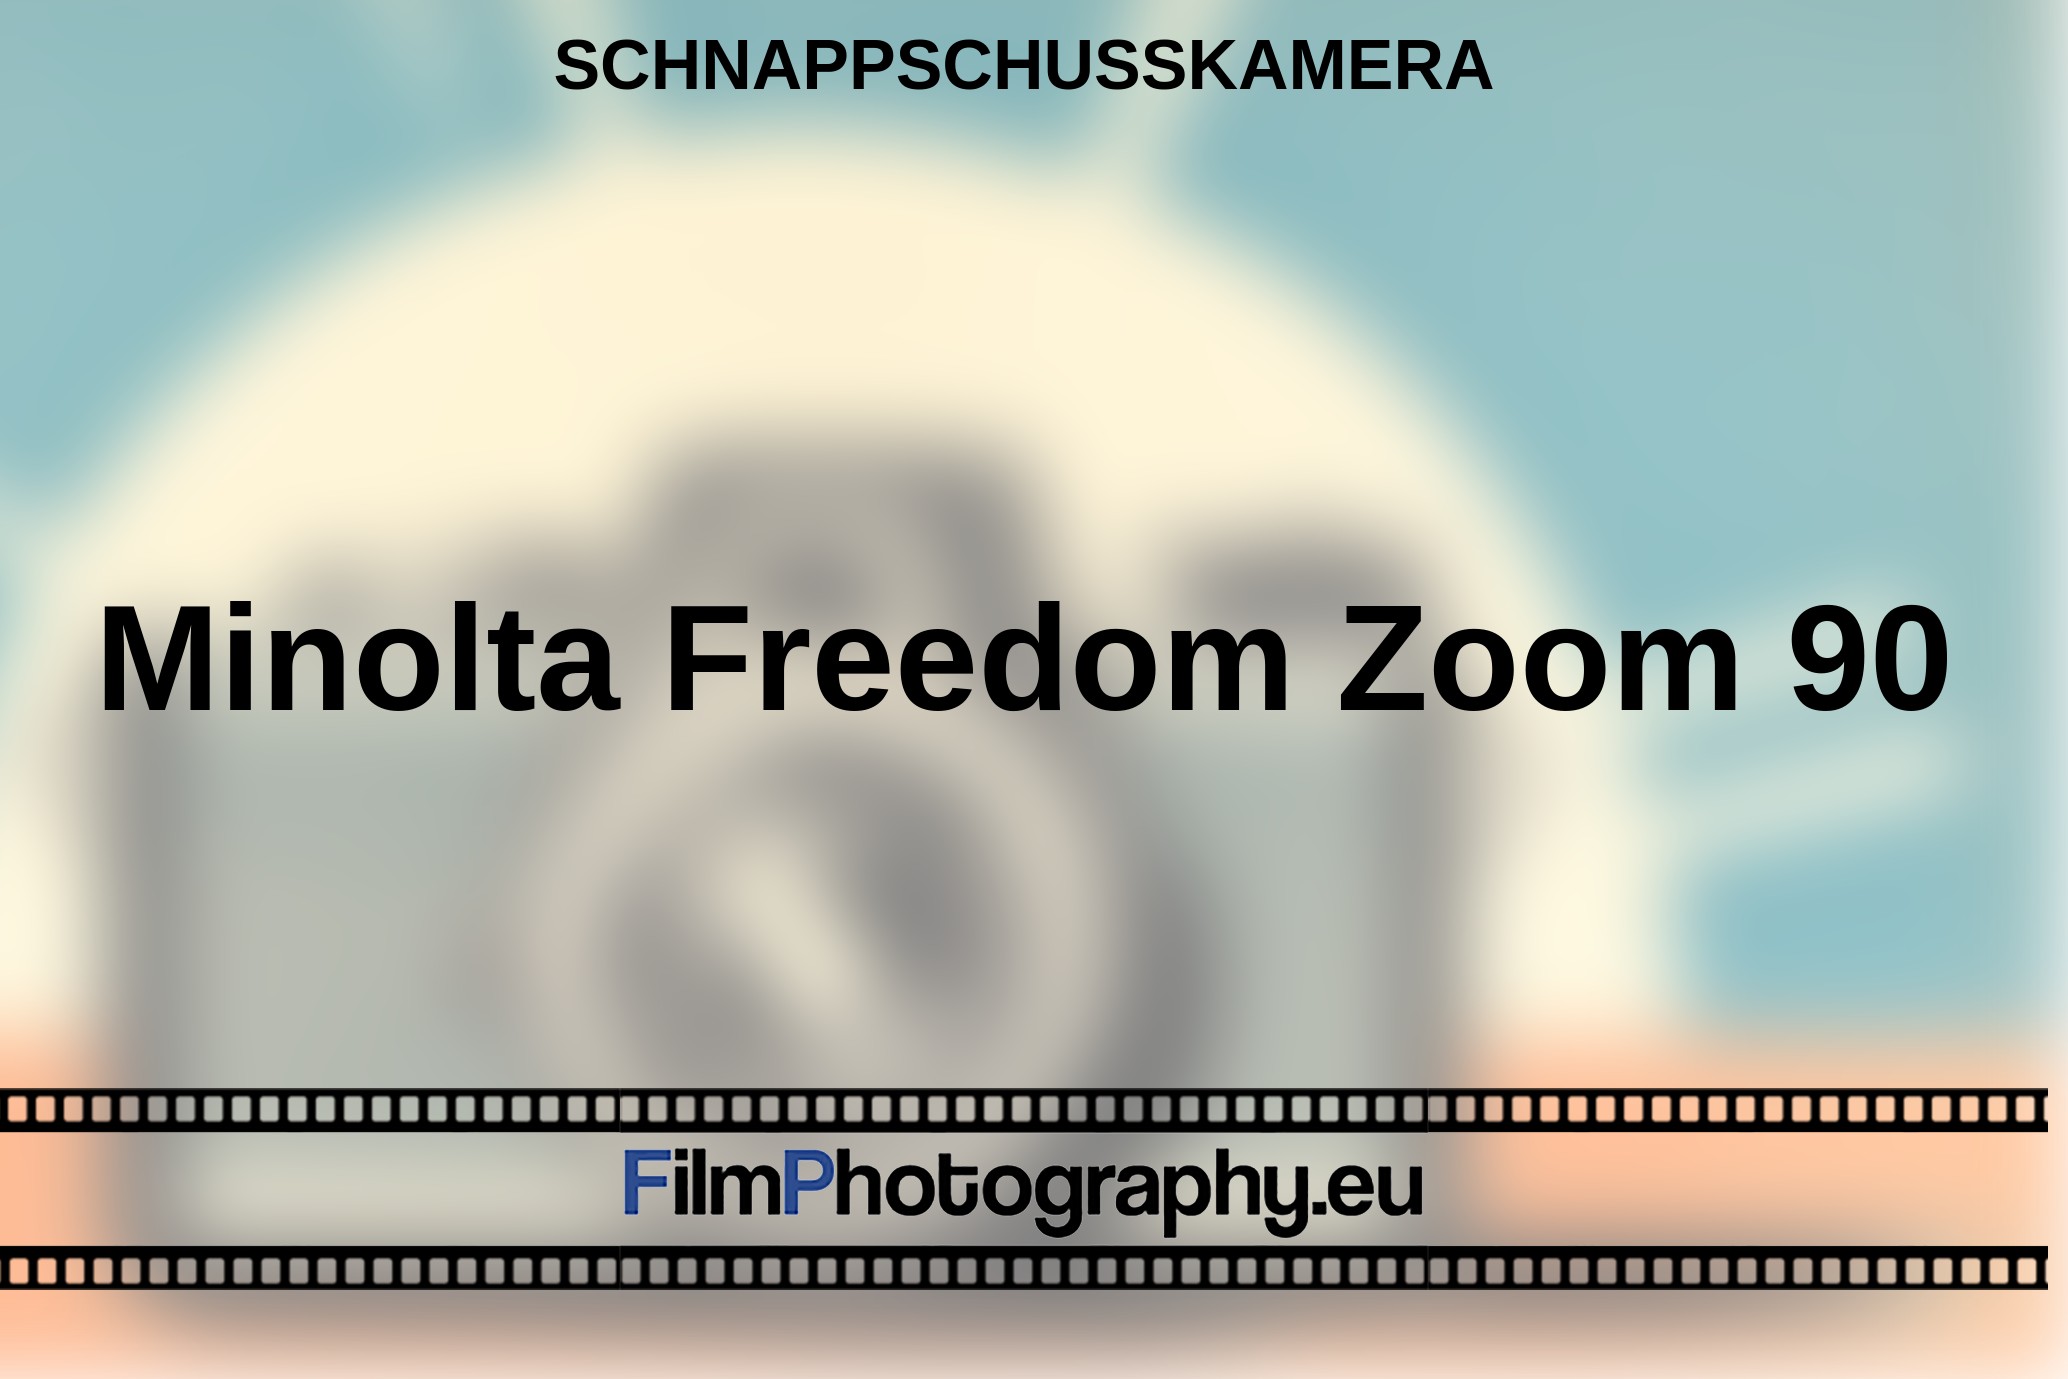 Minolta-Freedom-Zoom-90-Schnappschusskamera-bnv.jpg